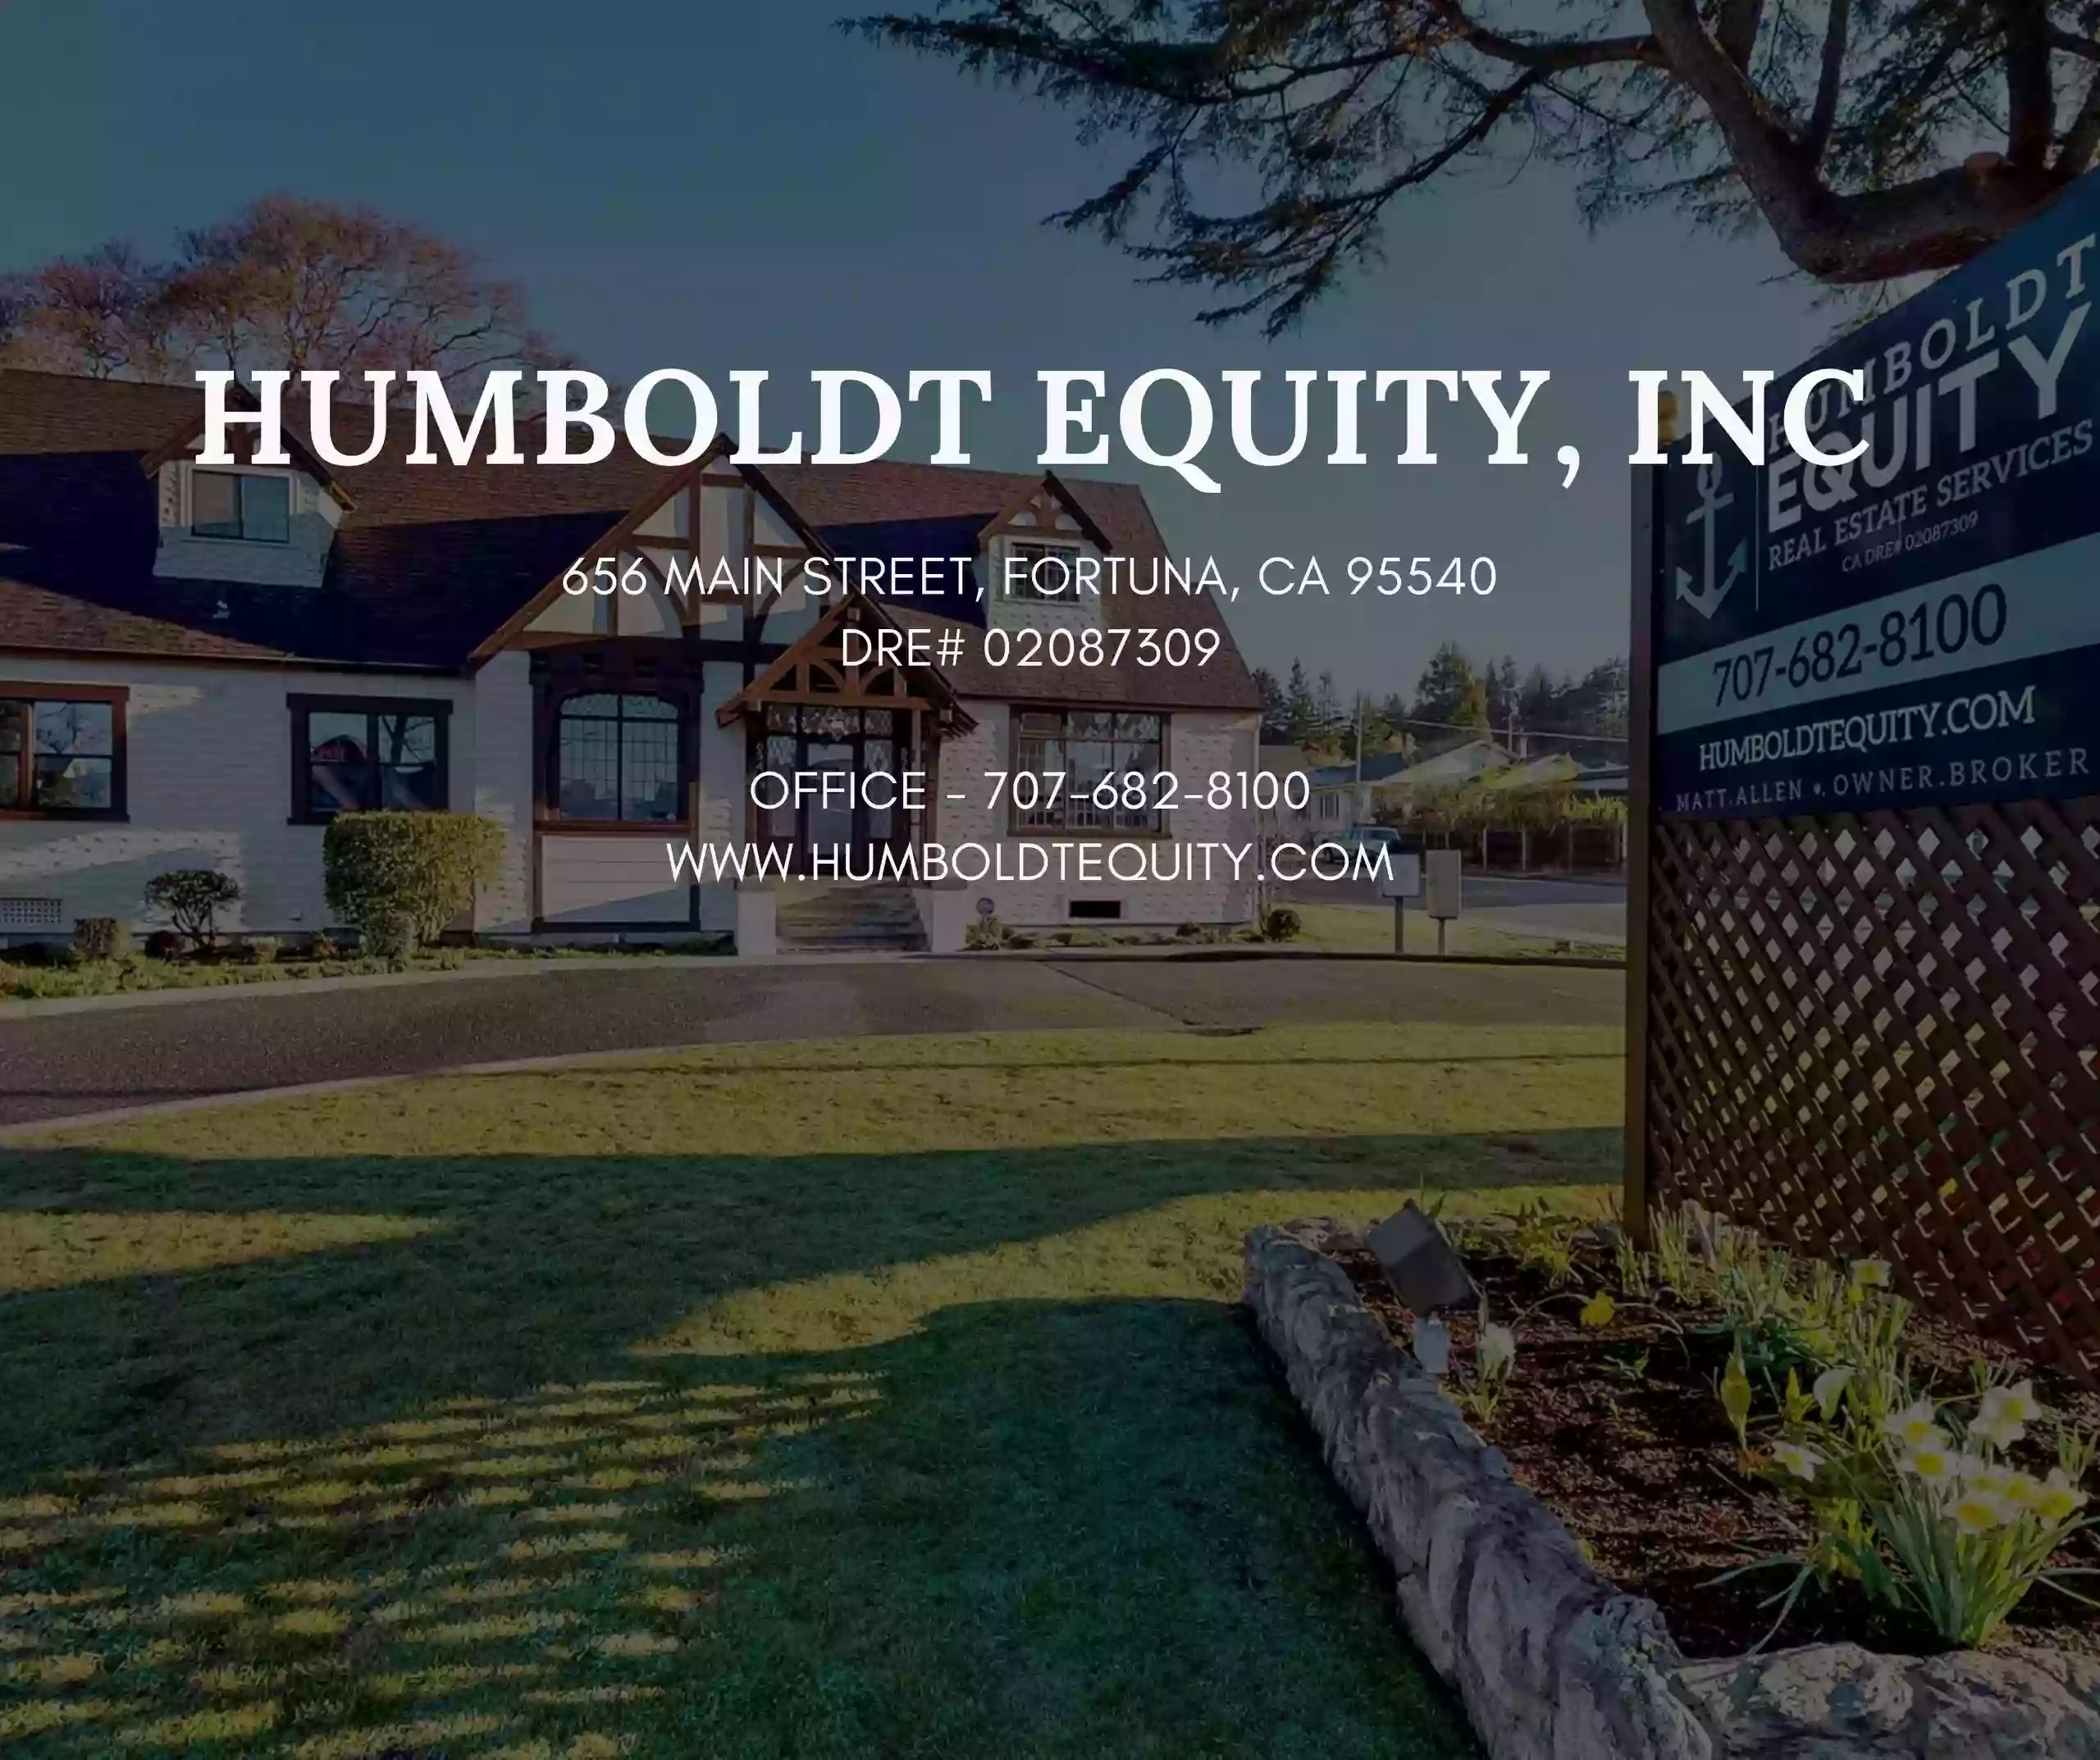 Humboldt Equity, Inc